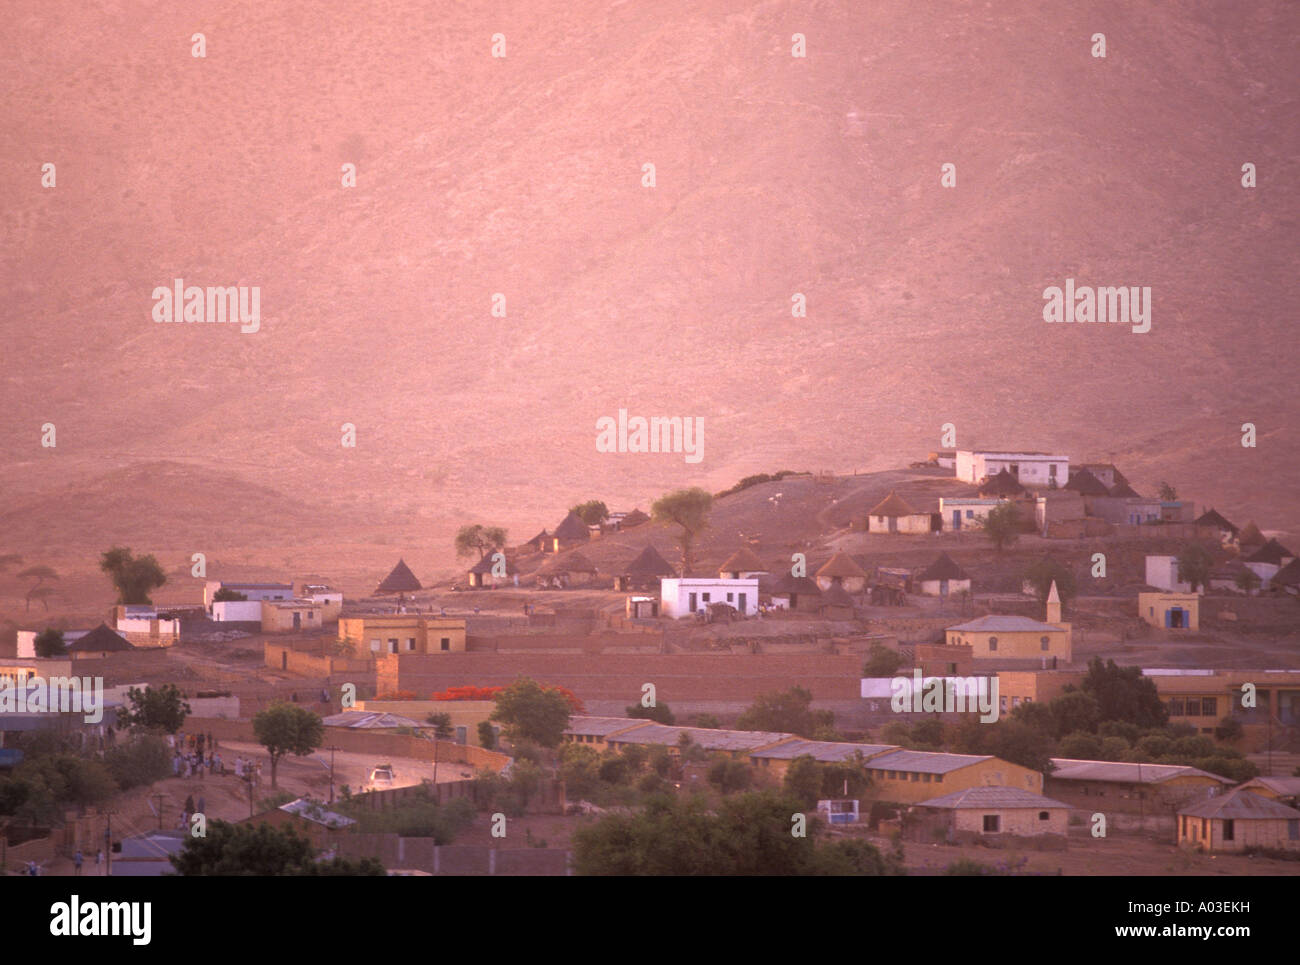 Stock image of Kerin Eritrea in a desert like setting Stock Photo